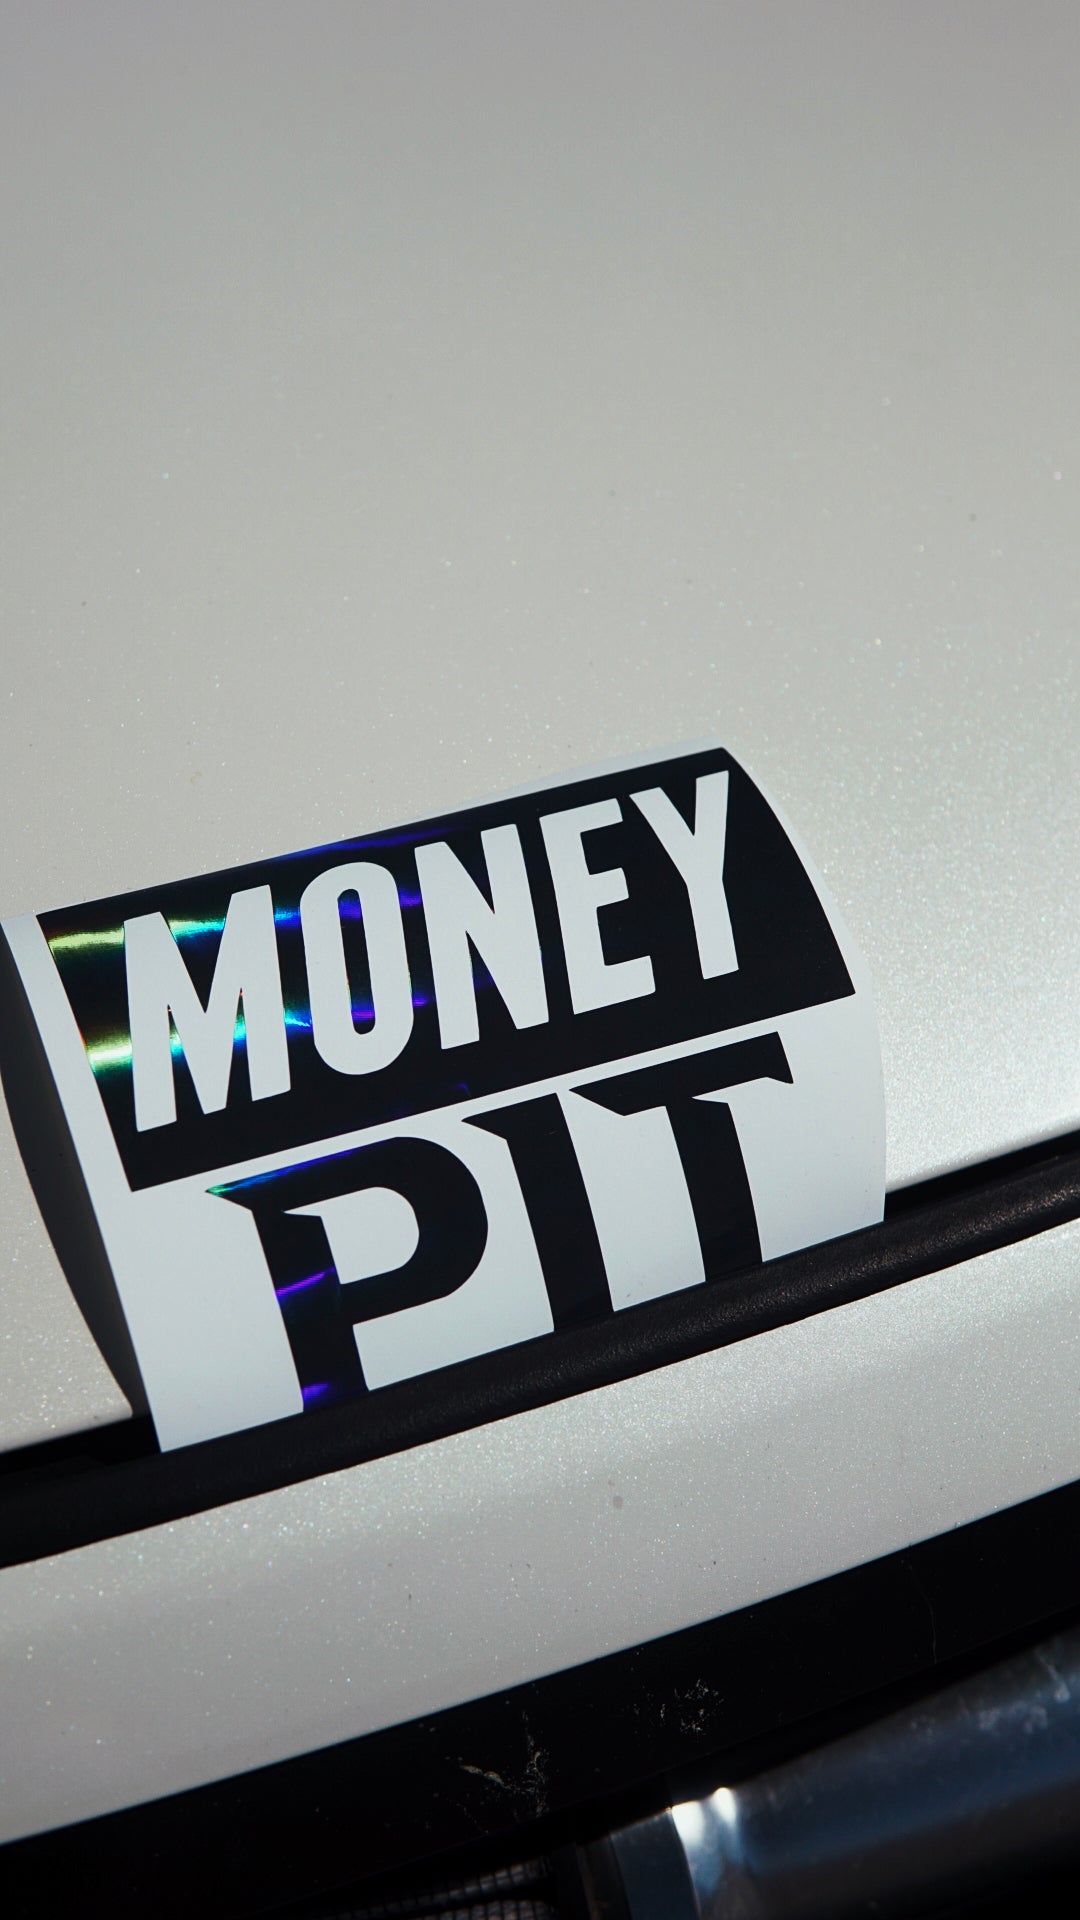 Money pit